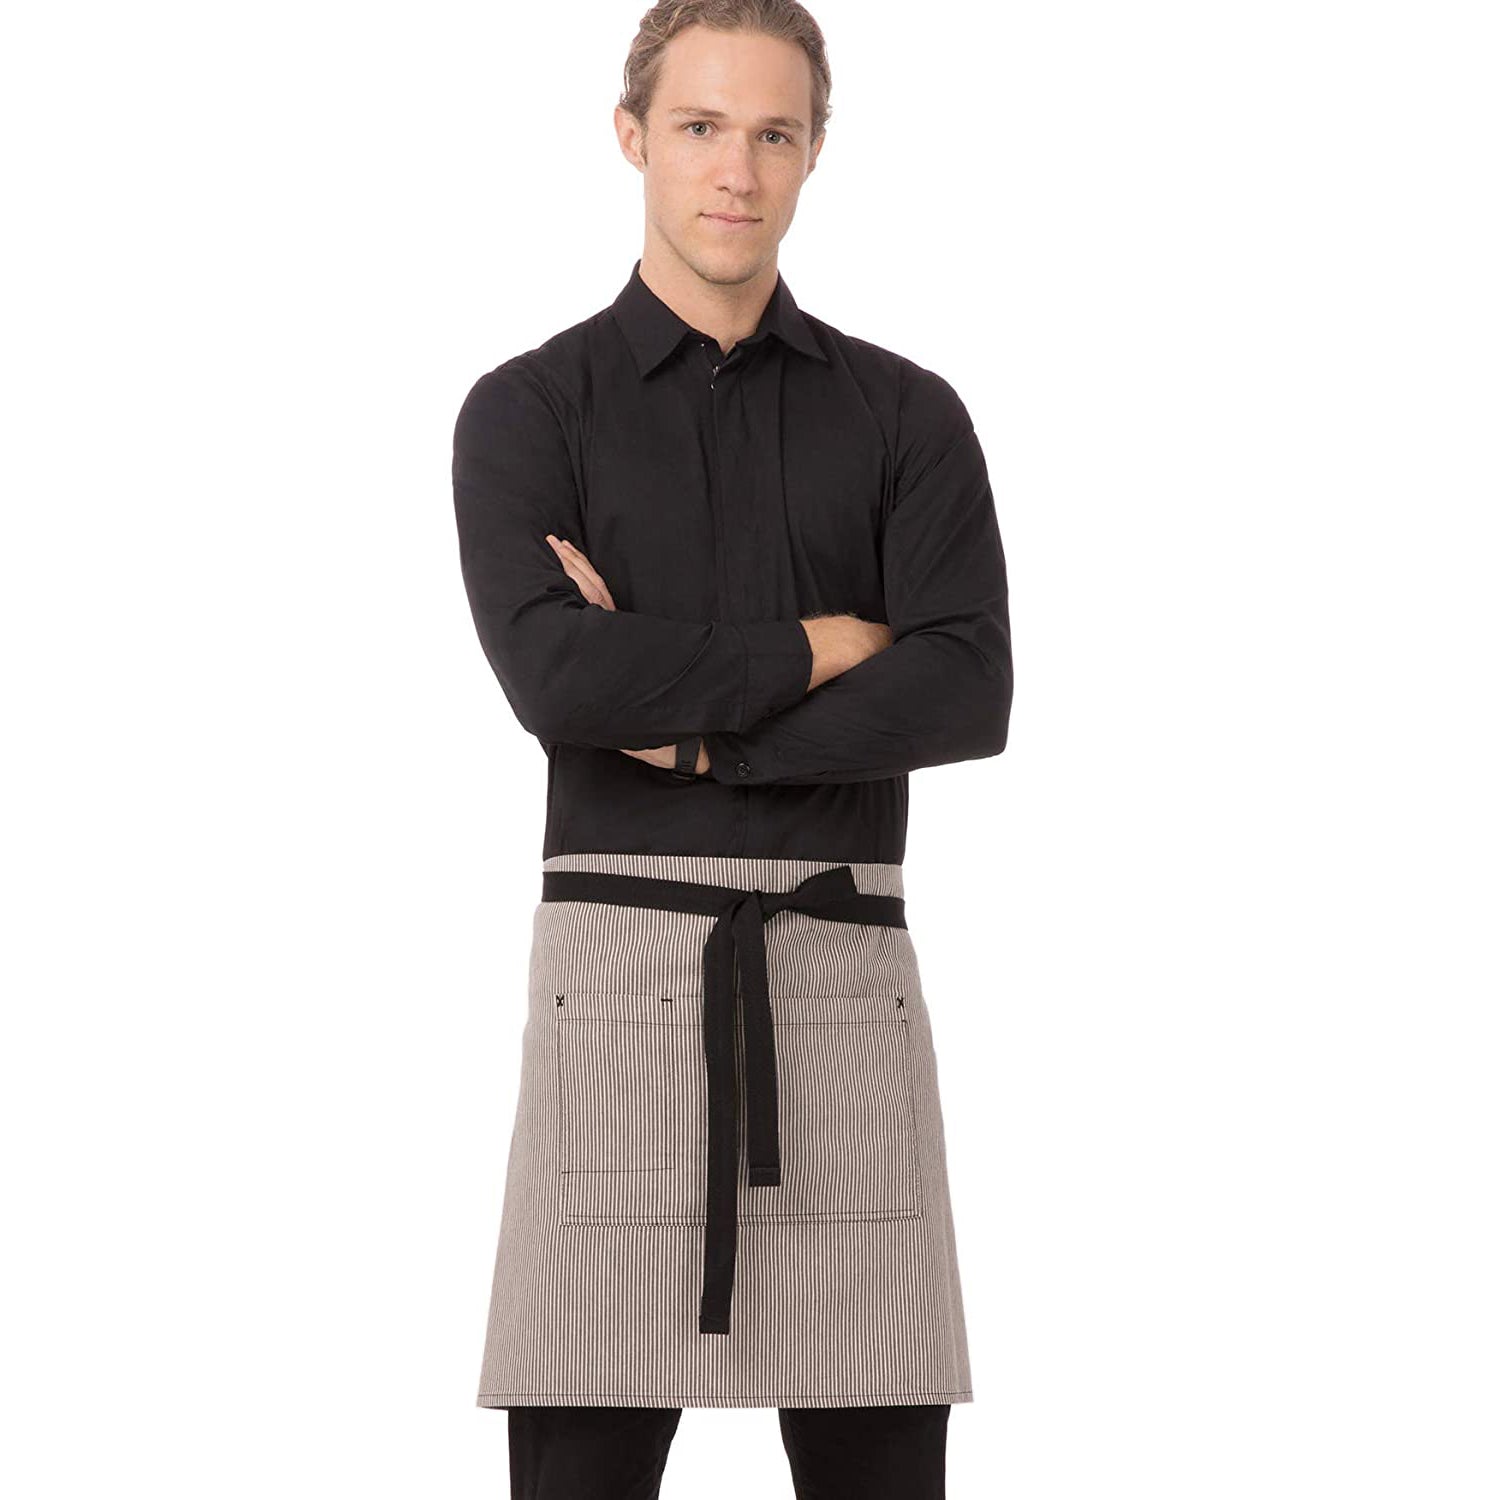 Unisex Portland Half Bistro kitchen aprons, Black, One Size US